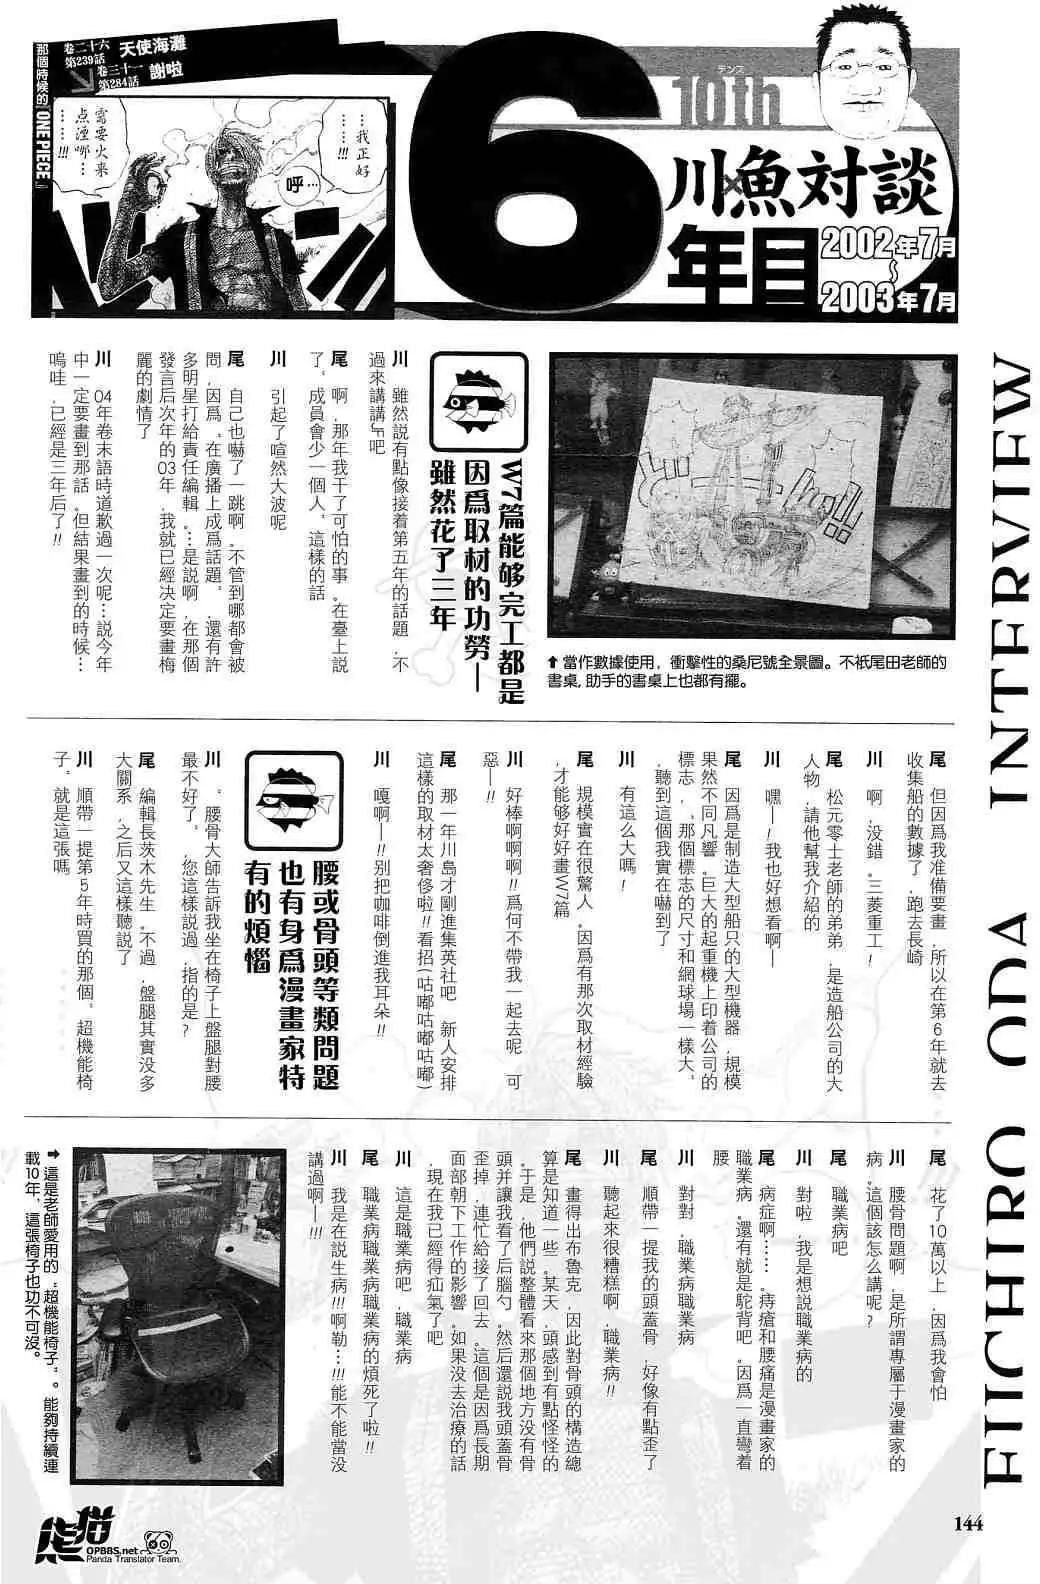 ONE PIECE航海王 - 海賊王10週年增刊完全版(1/2) - 8